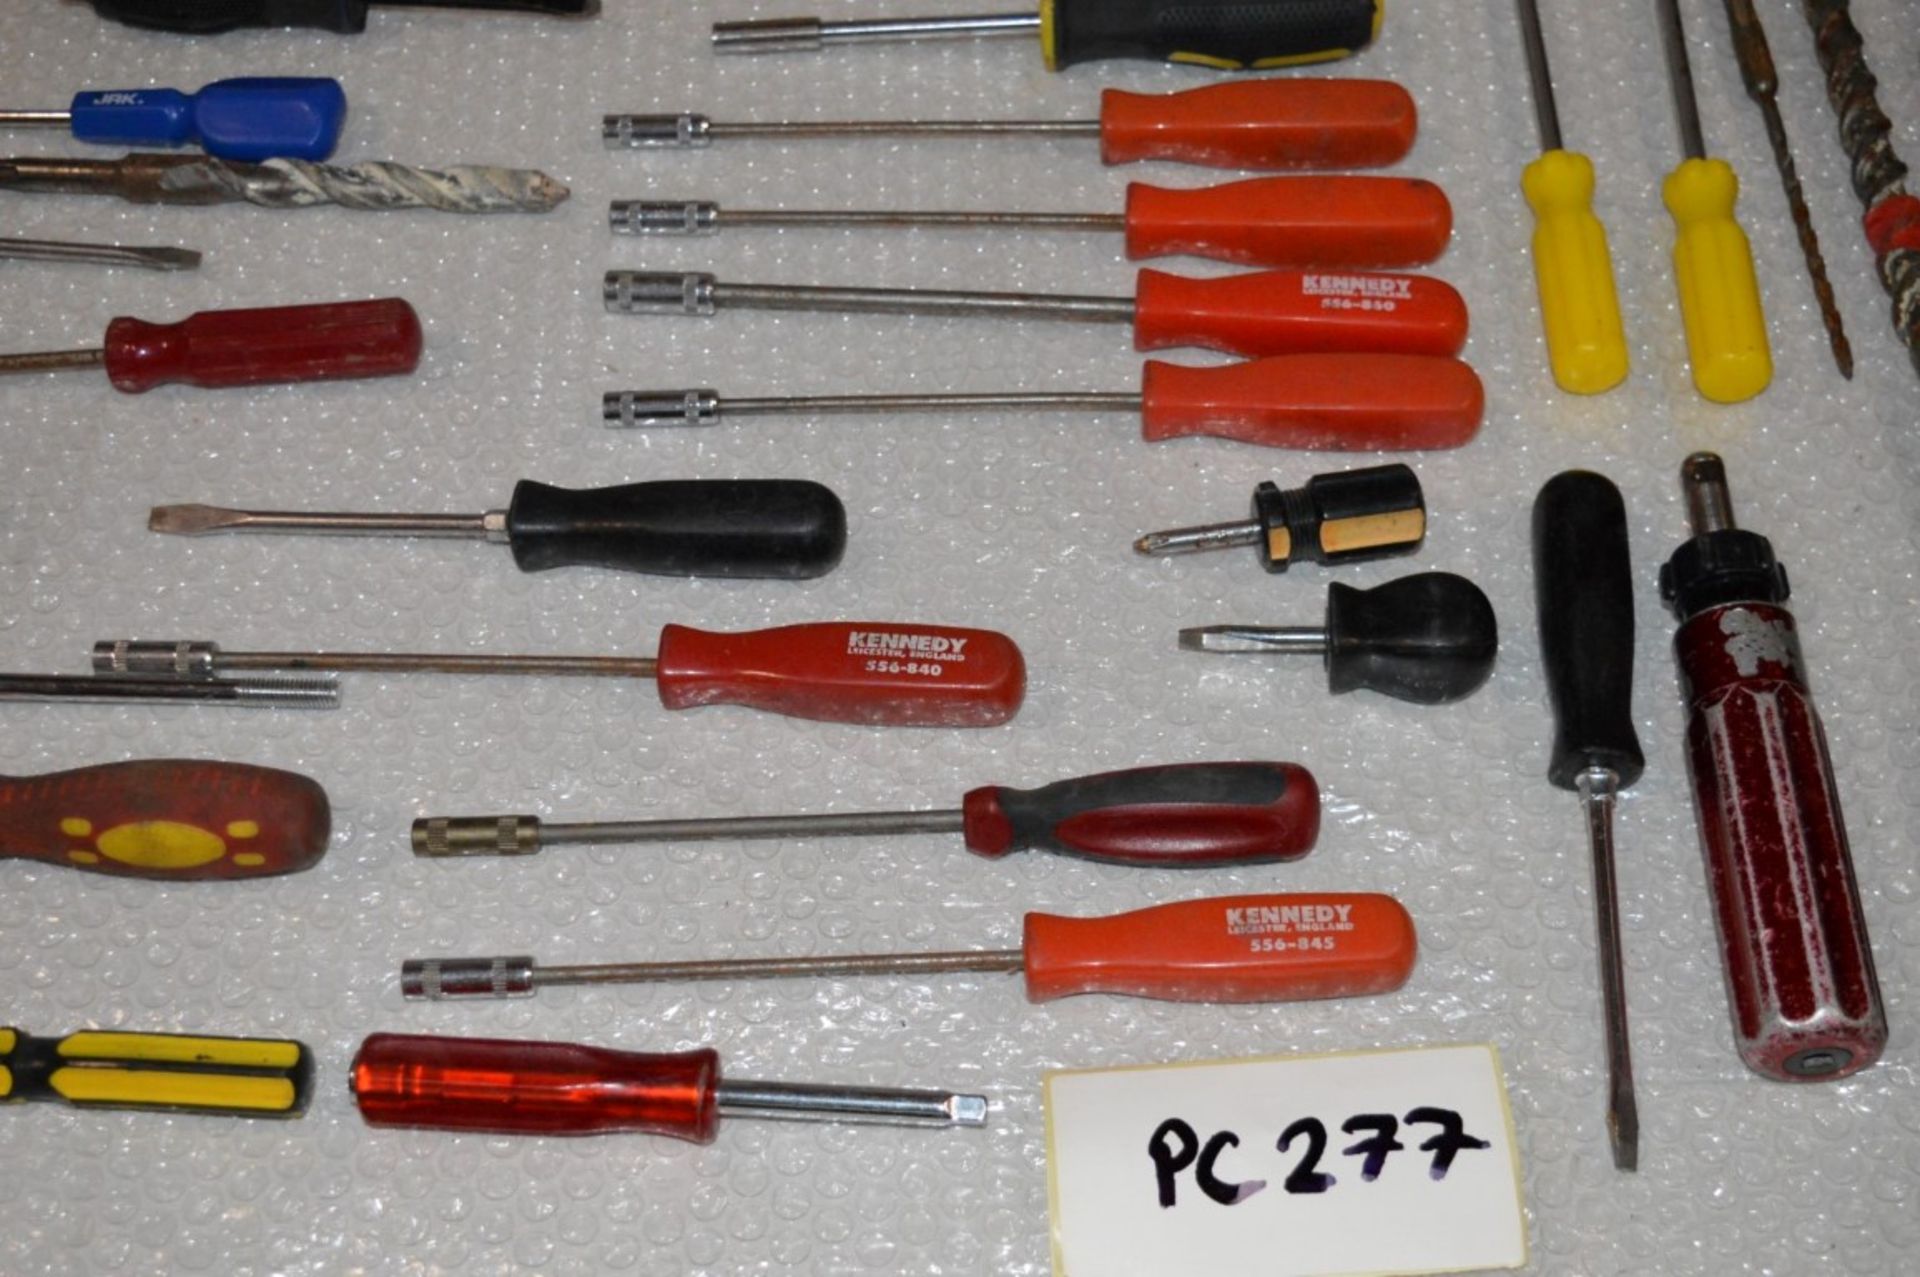 54 x Various Hand Tools Iincluding Screwdrivers, Saws, Bores, Drill Bits, Allen Keys, Hex Head Screw - Image 3 of 15